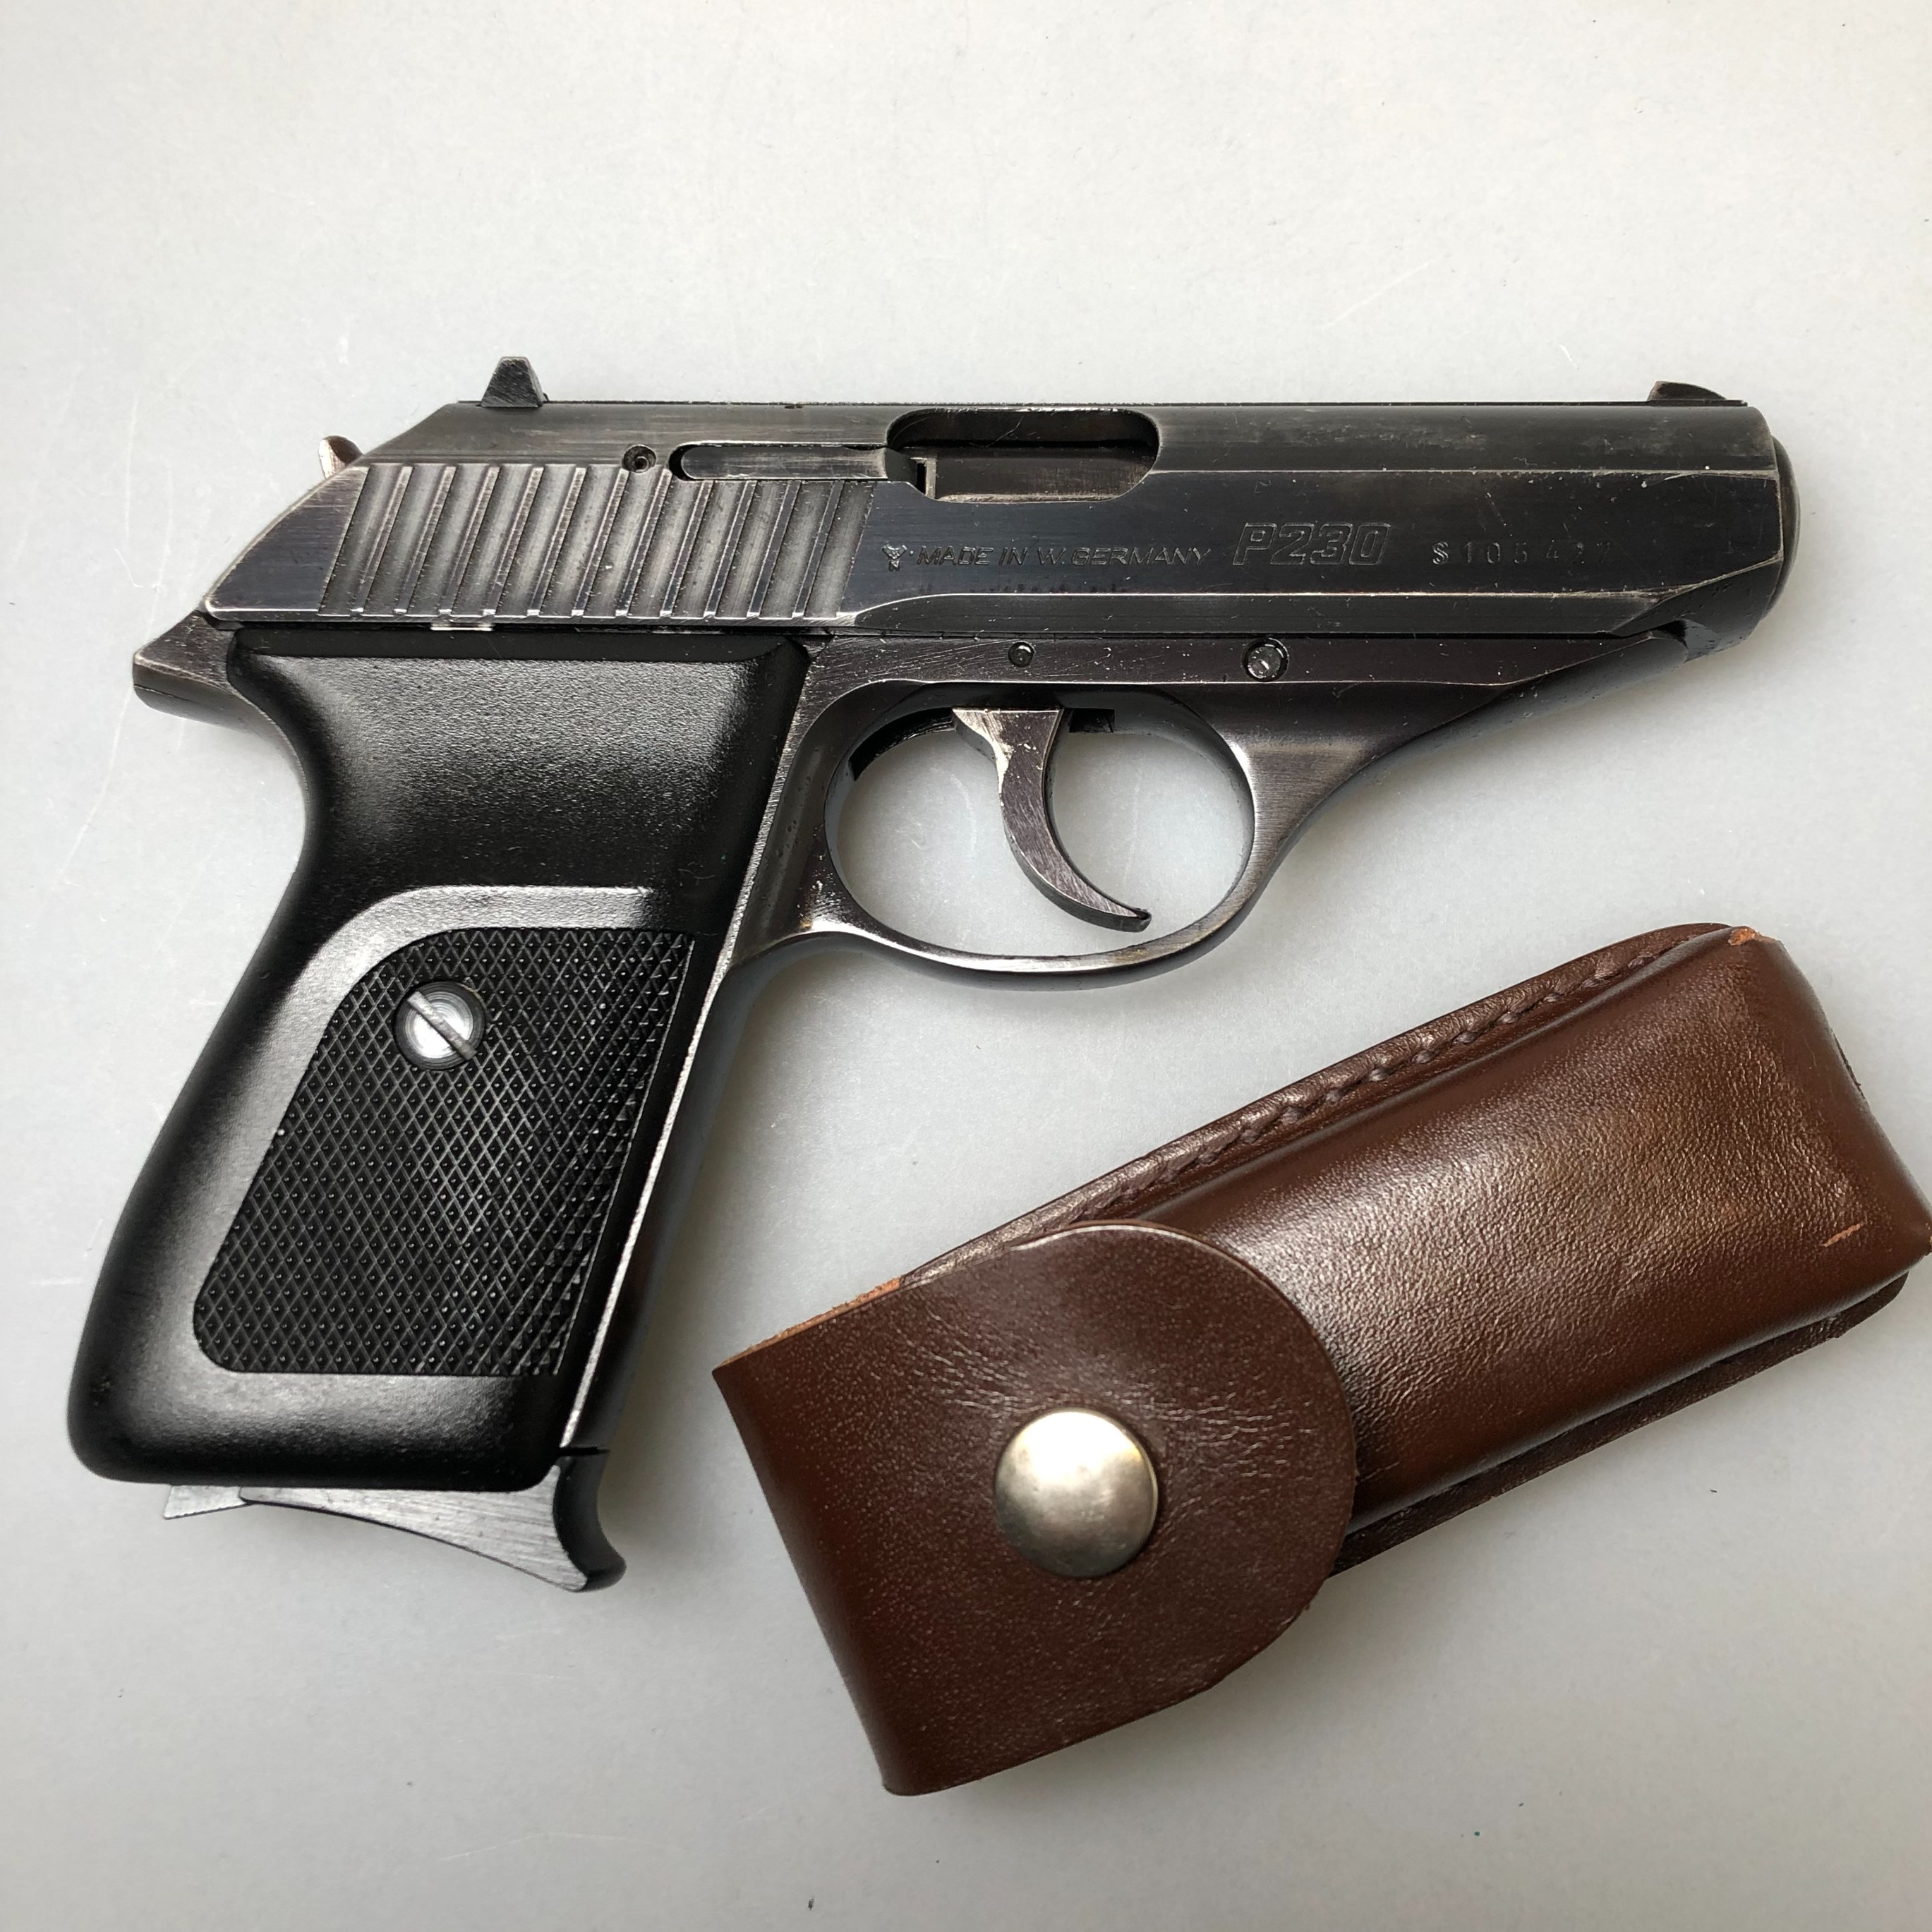 Pistole SIG-SAUER P230 9mm Police ehem. Polizei Solothurn, Occasion SNR:S105427